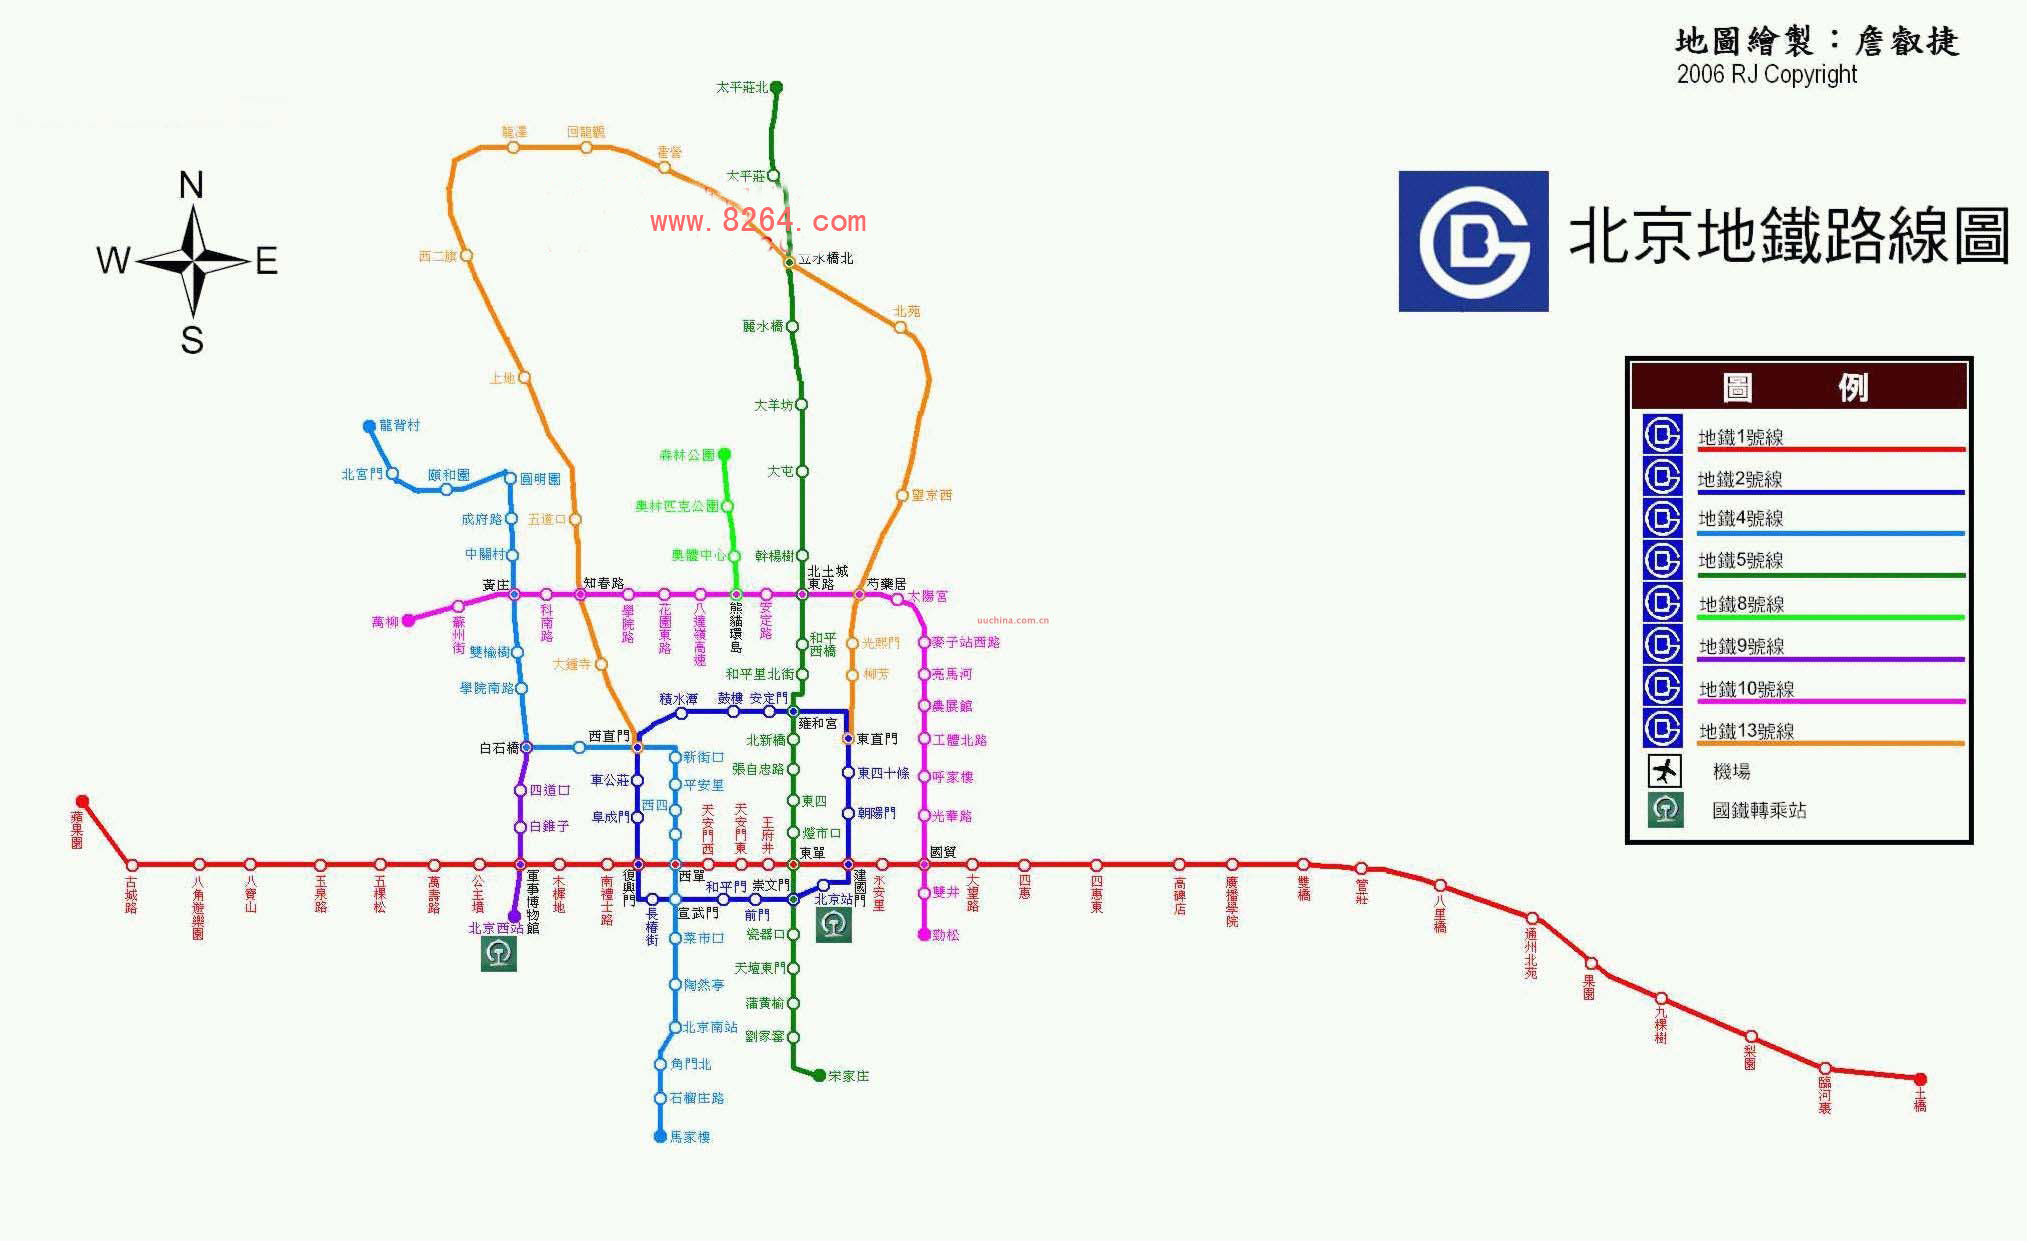 Beijing Subway Map -- click to enlarge